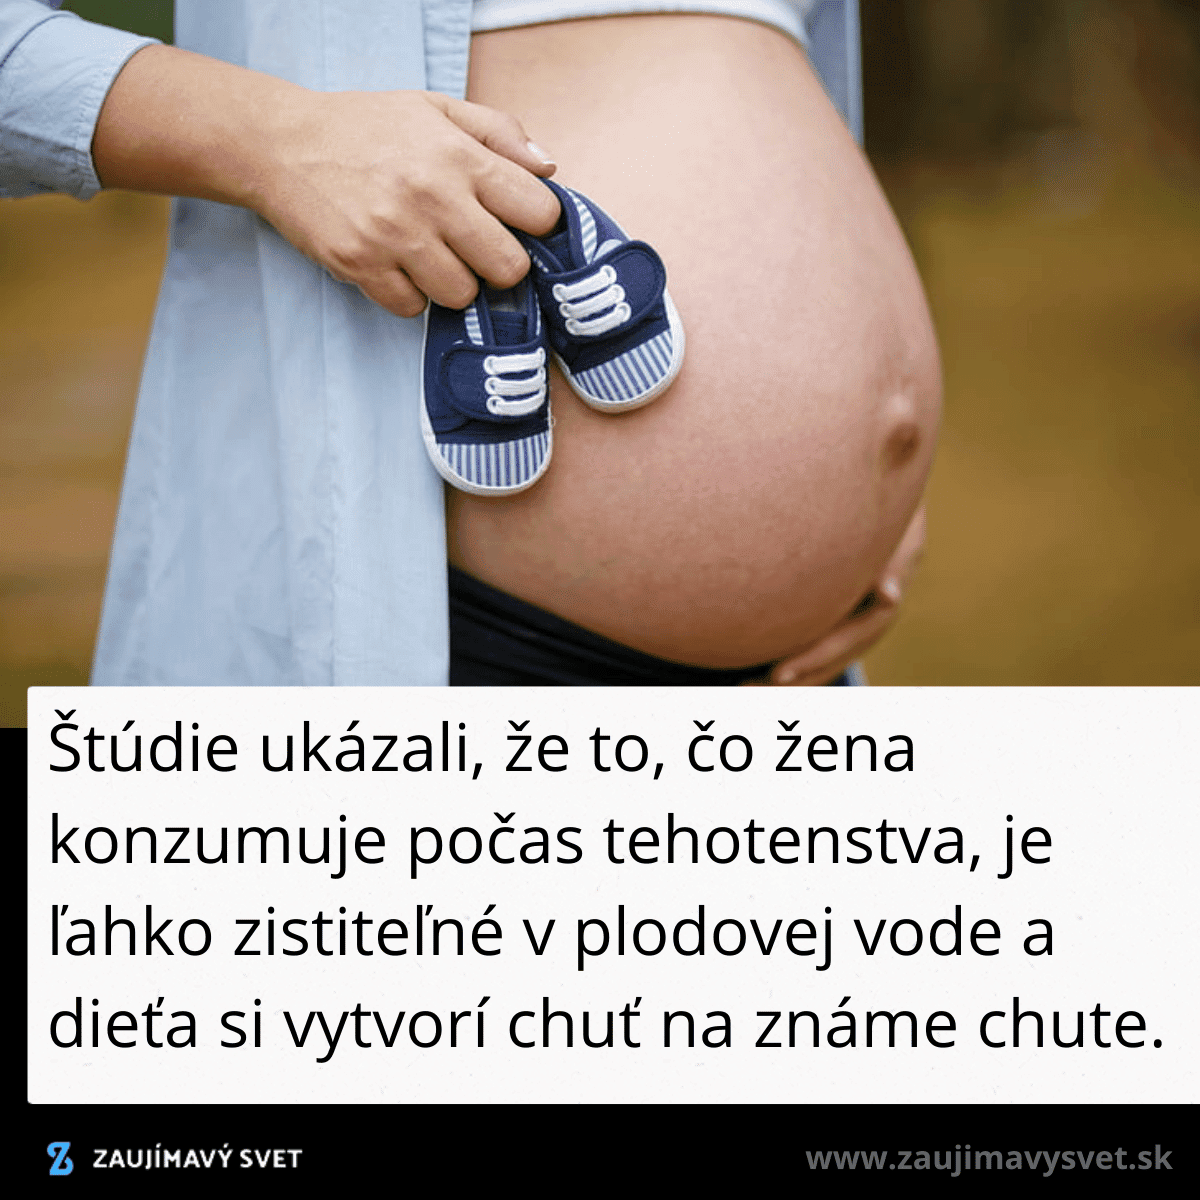 pregnancy